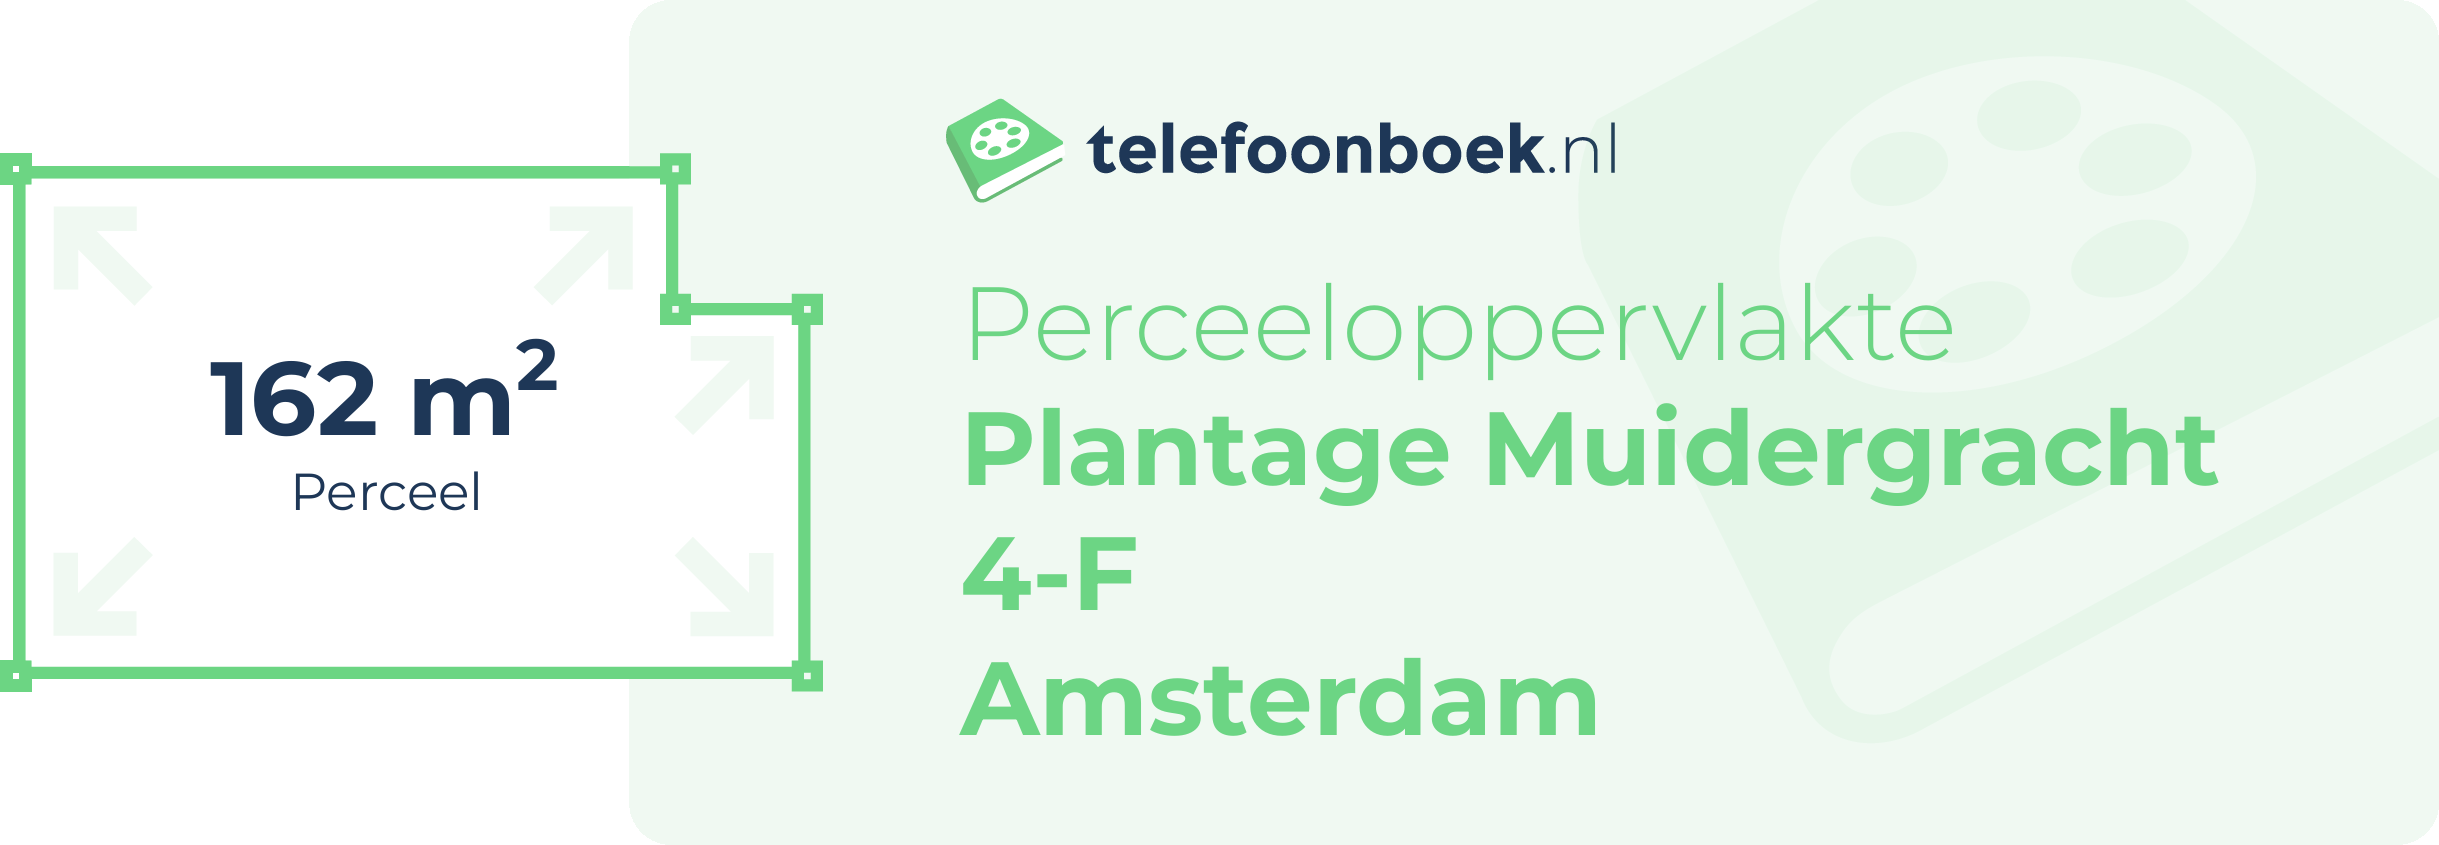 Perceeloppervlakte Plantage Muidergracht 4-F Amsterdam